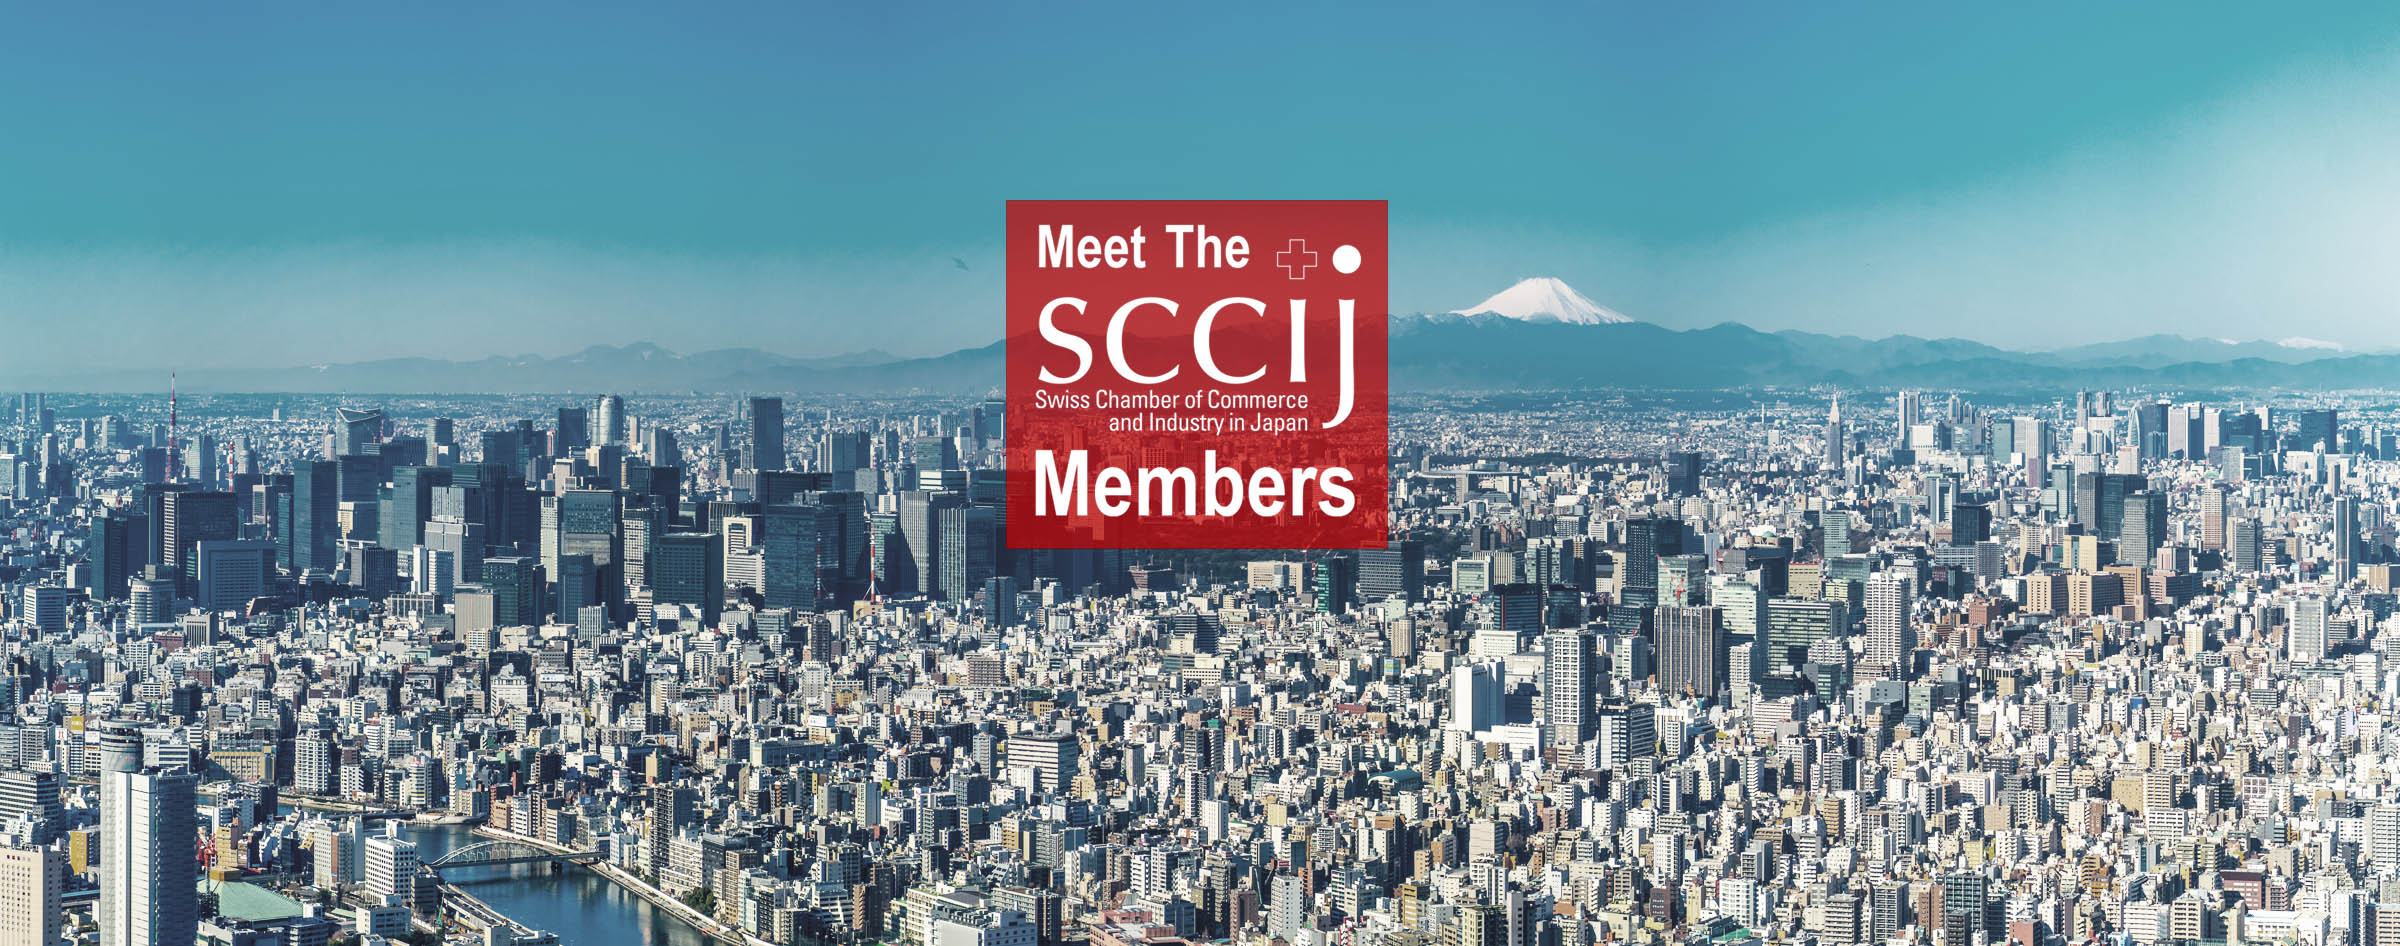 Meet the SCCIJ Members #1 – Matthias Y. Sutter, General Manager, Shangri-La Hotel Tokyo